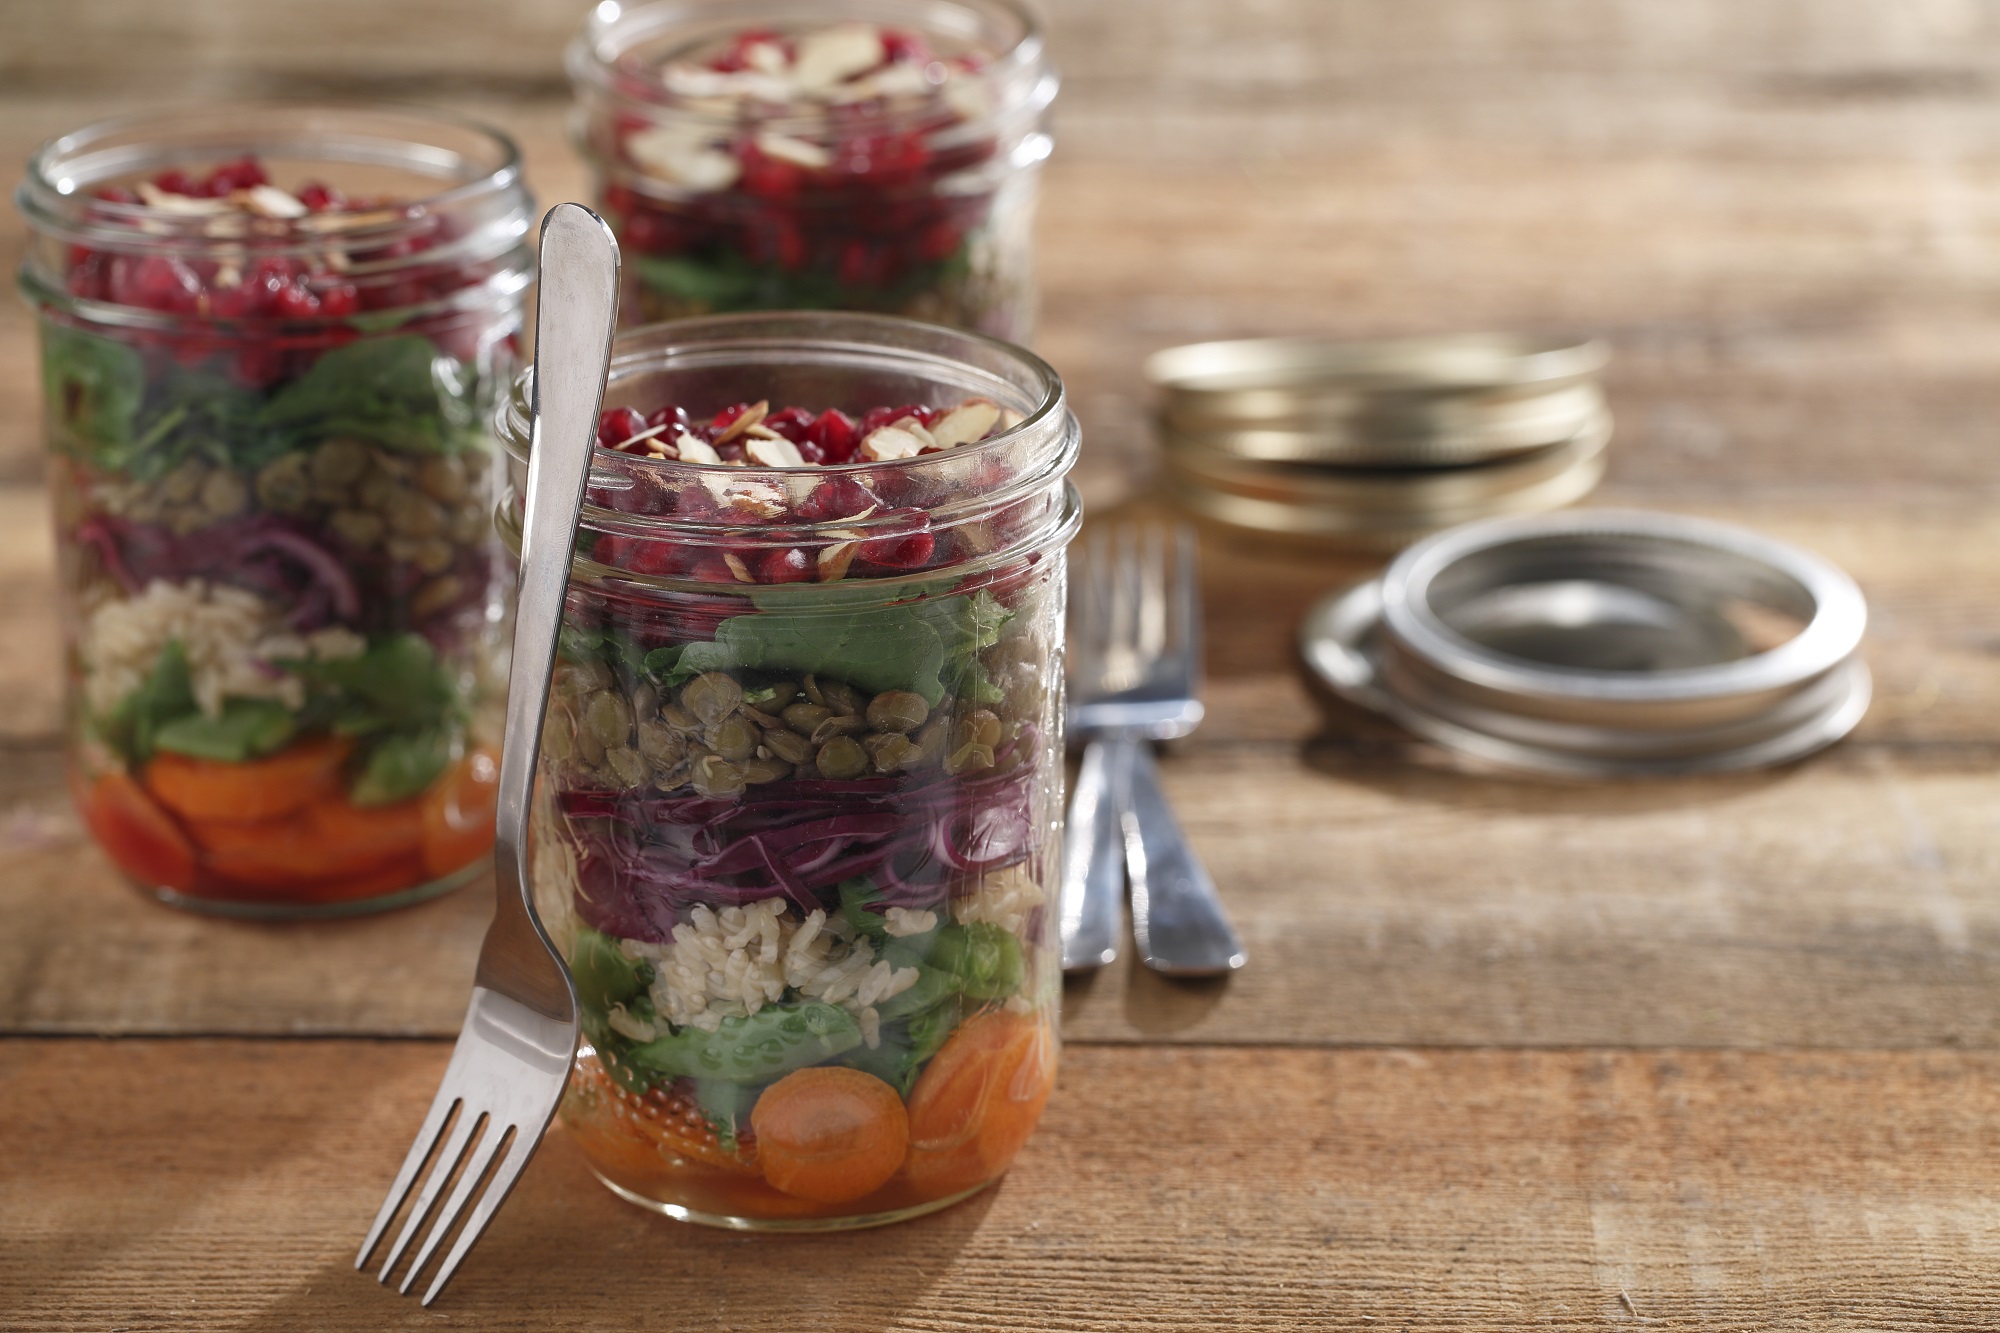 Rainbow salad in a glass jars Stock Photo by ©sarsmis 73088347